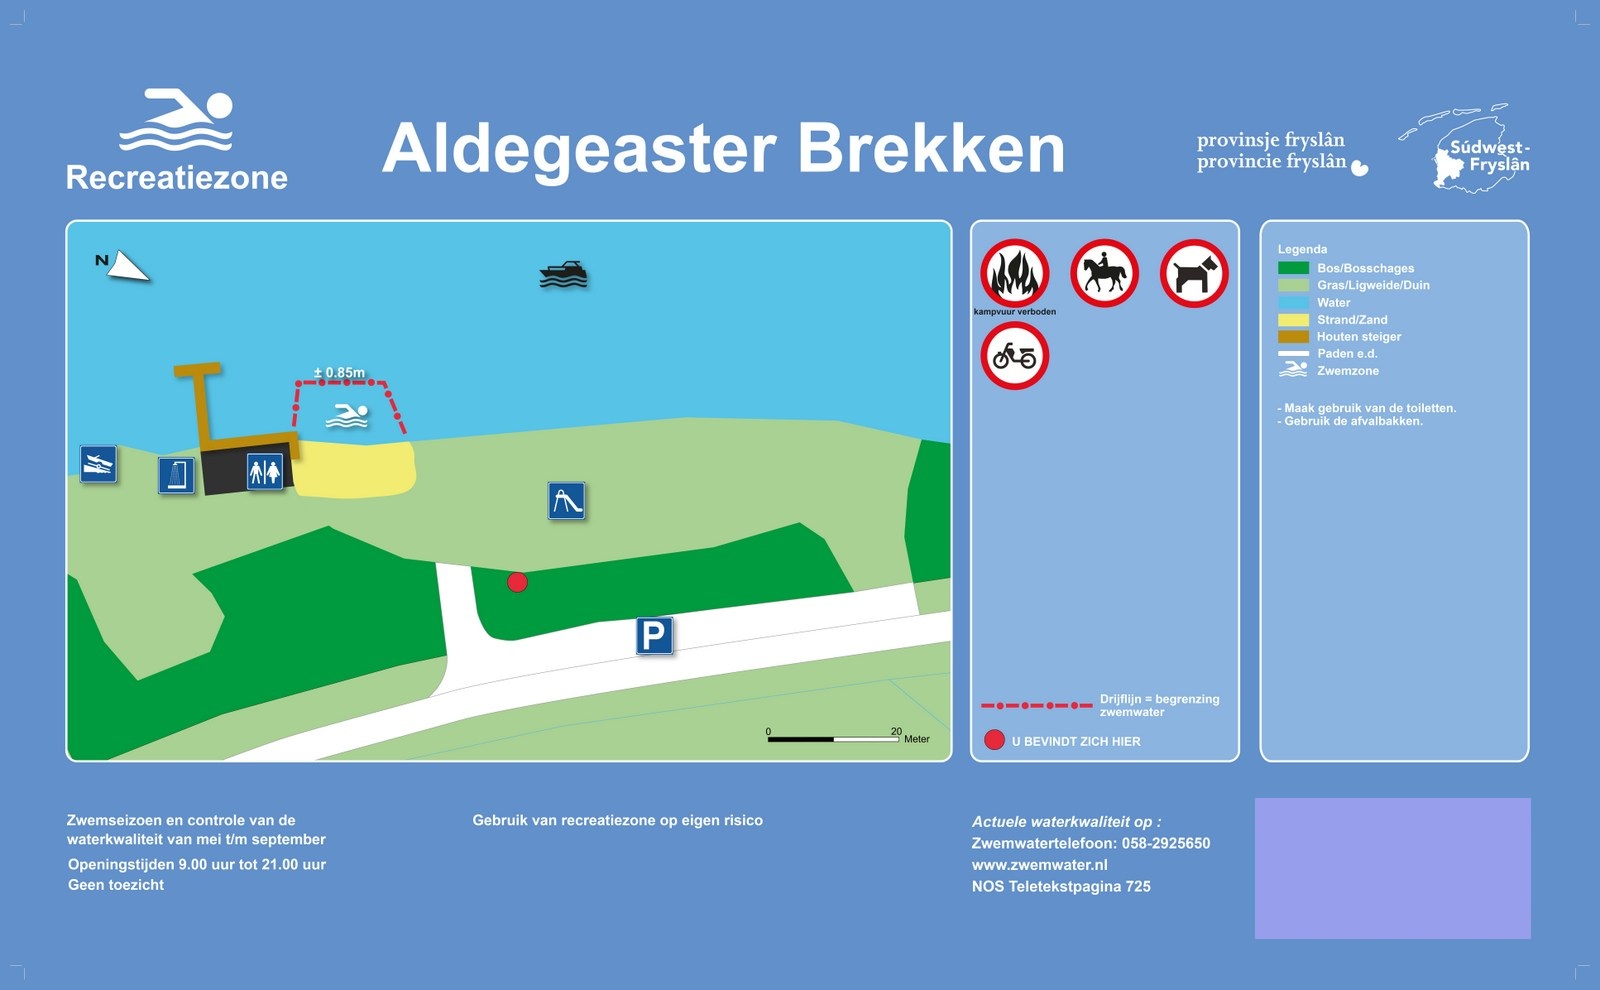 The information board at the swimming location Aldegeaster Brekken